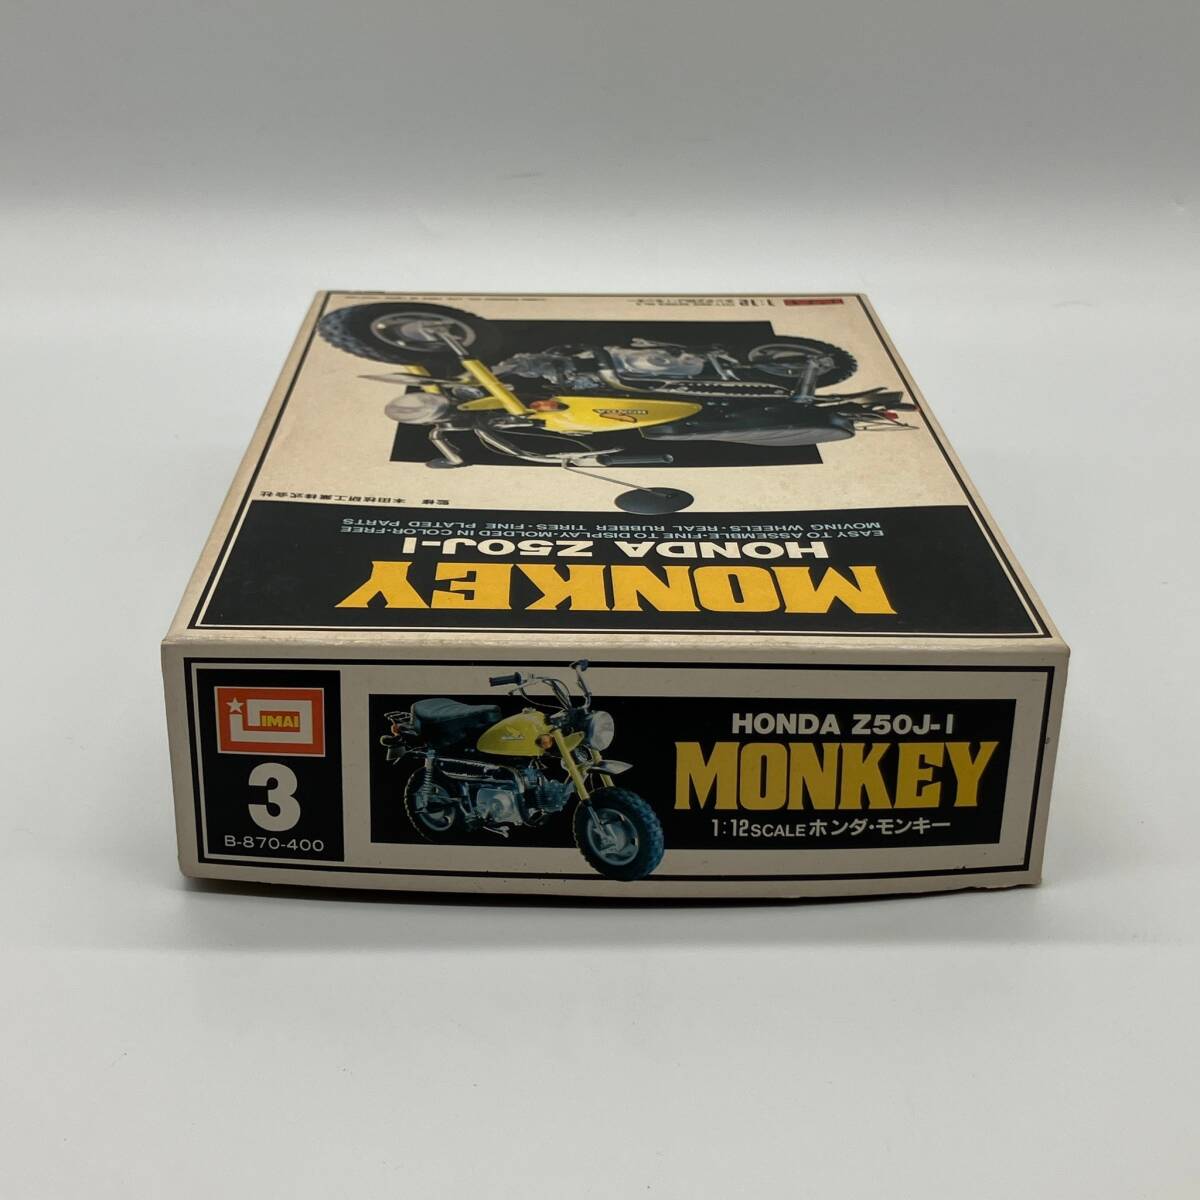 [ outright sales!] not yet assembly plastic model IMAI Imai HONDA MONKEY Honda Monkey CITY-BIKE SERIES Z50J-Ⅰ No,3 1/12